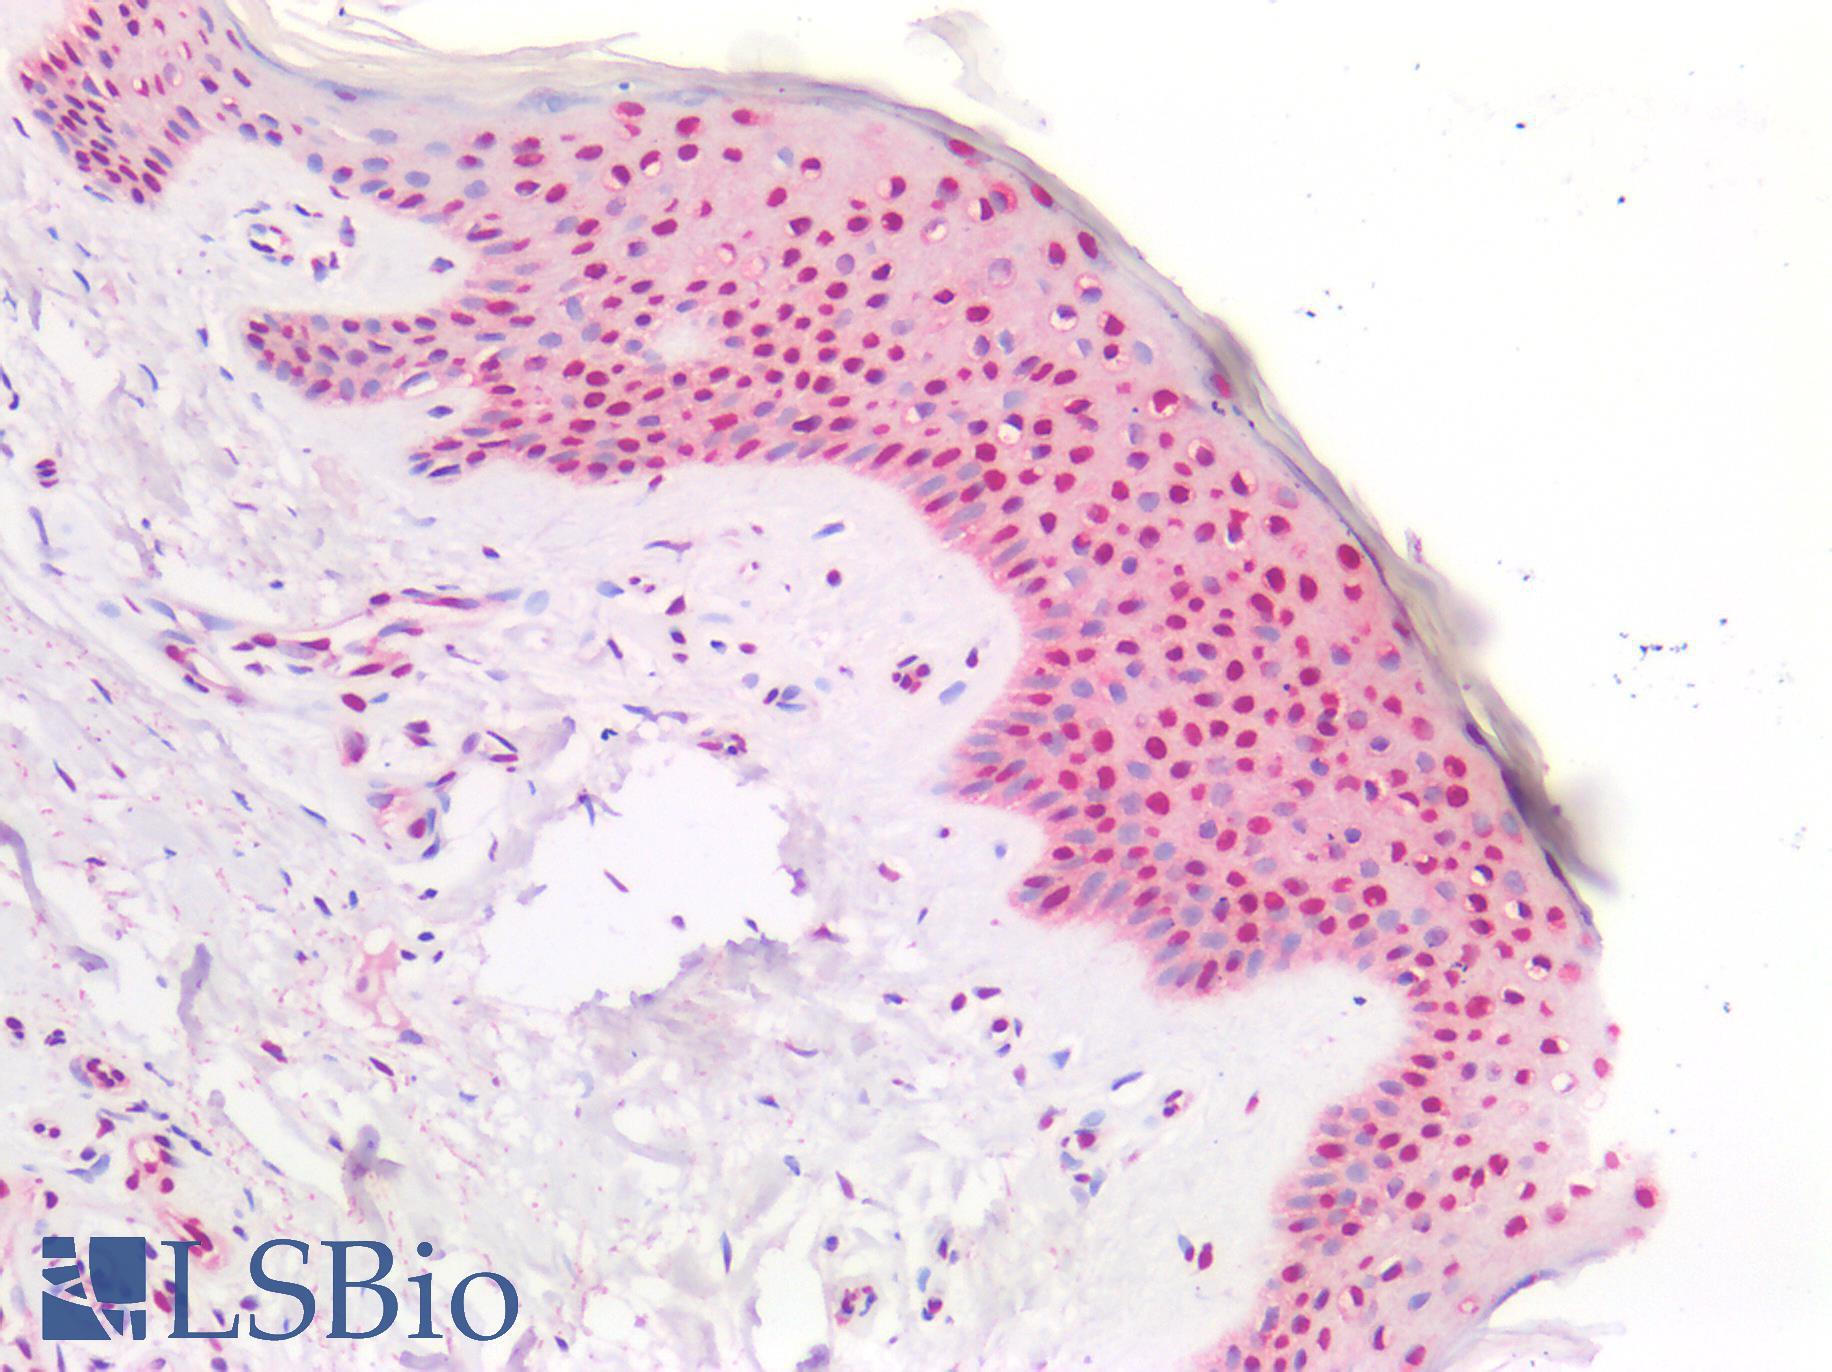 PLEKHG5 Antibody - Human Skin: Formalin-Fixed, Paraffin-Embedded (FFPE)